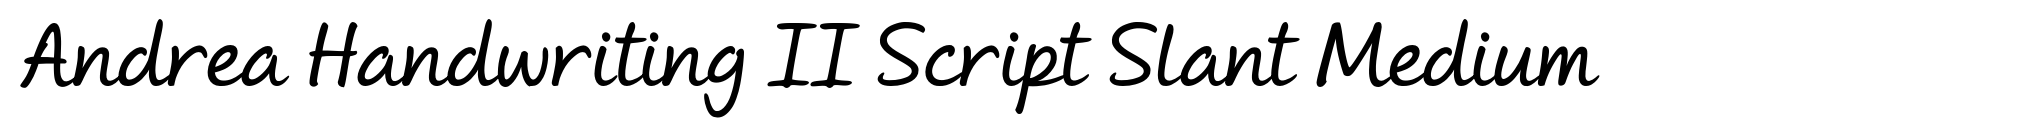 Andrea Handwriting II Script Slant Medium image